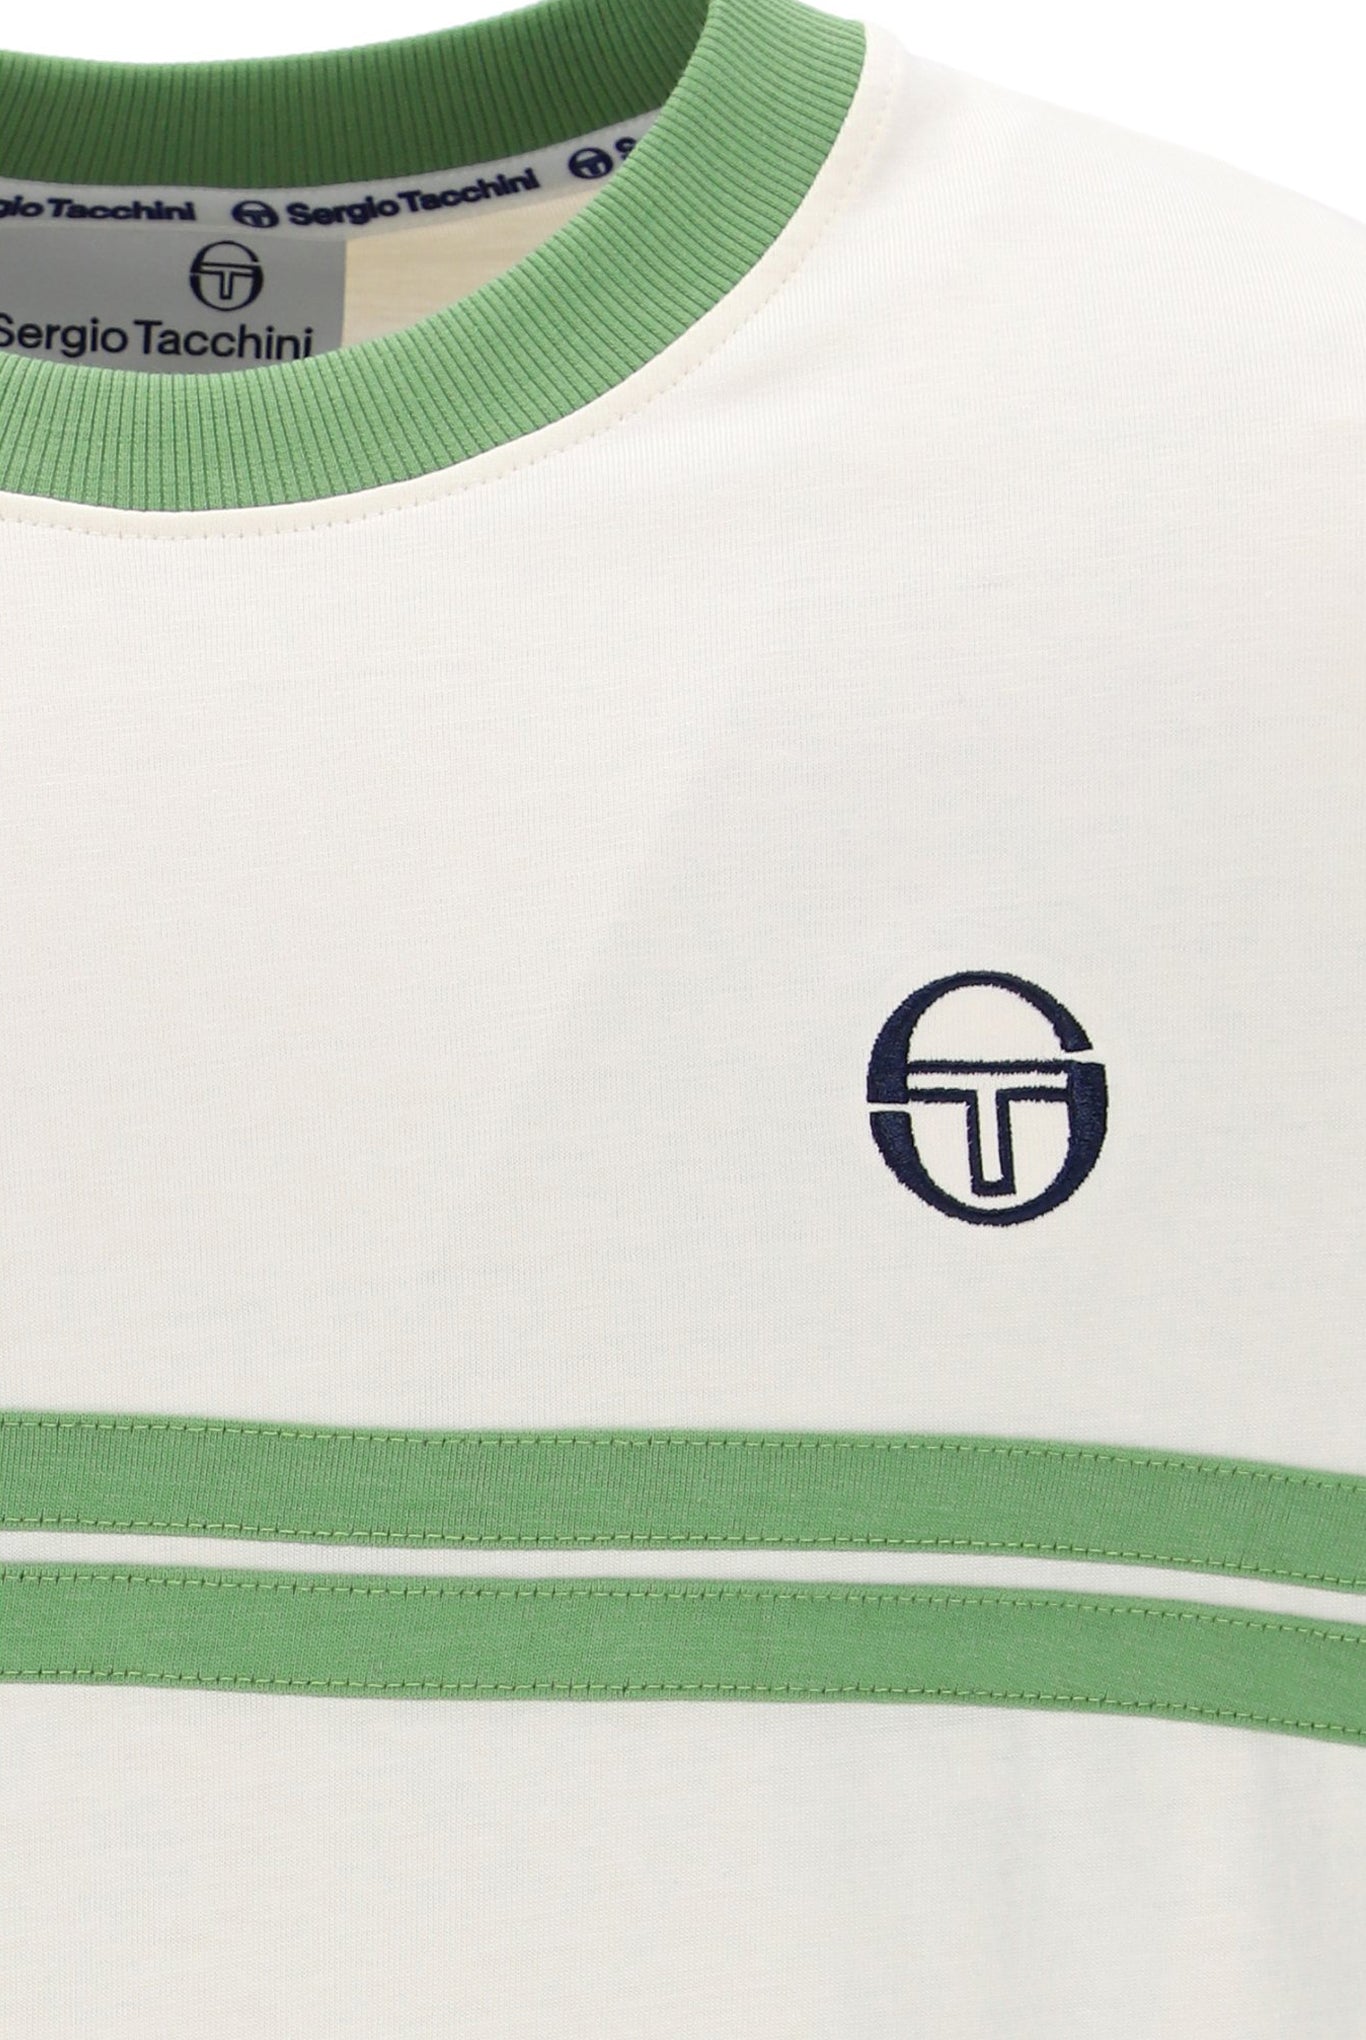 SERGIO TACCHINI SUPERMAC T-Shirt - PEARLED IVORY / JADE GREEN